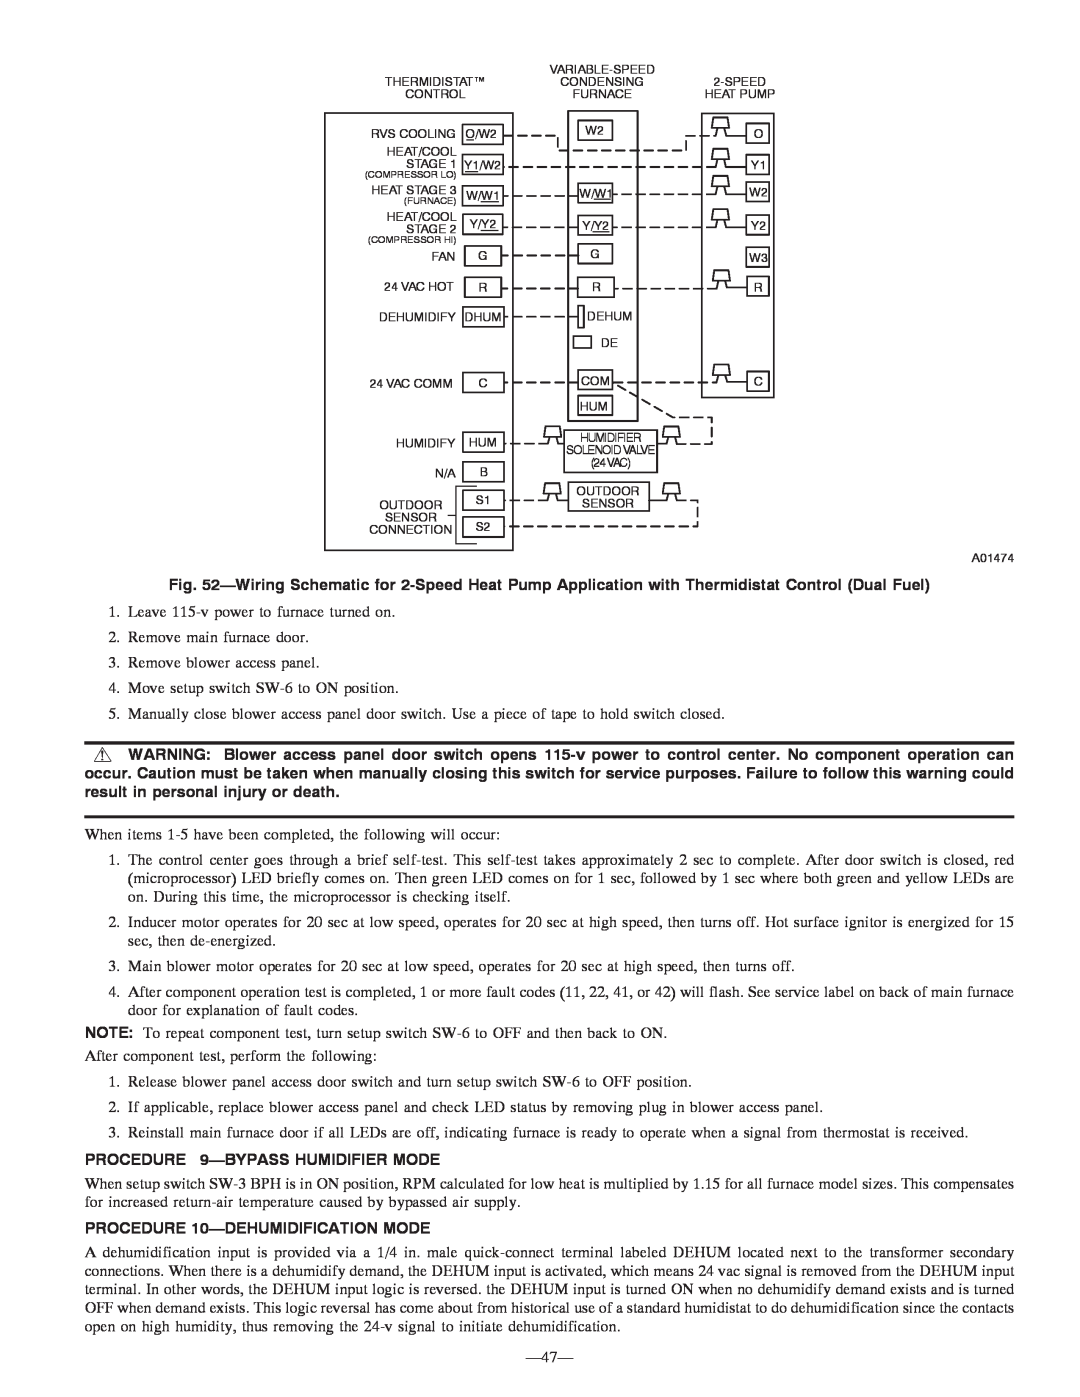 Bryant 355MAV instruction manual PROCEDURE 9-BYPASSHUMIDIFIER MODE, PROCEDURE 10-DEHUMIDIFICATIONMODE 